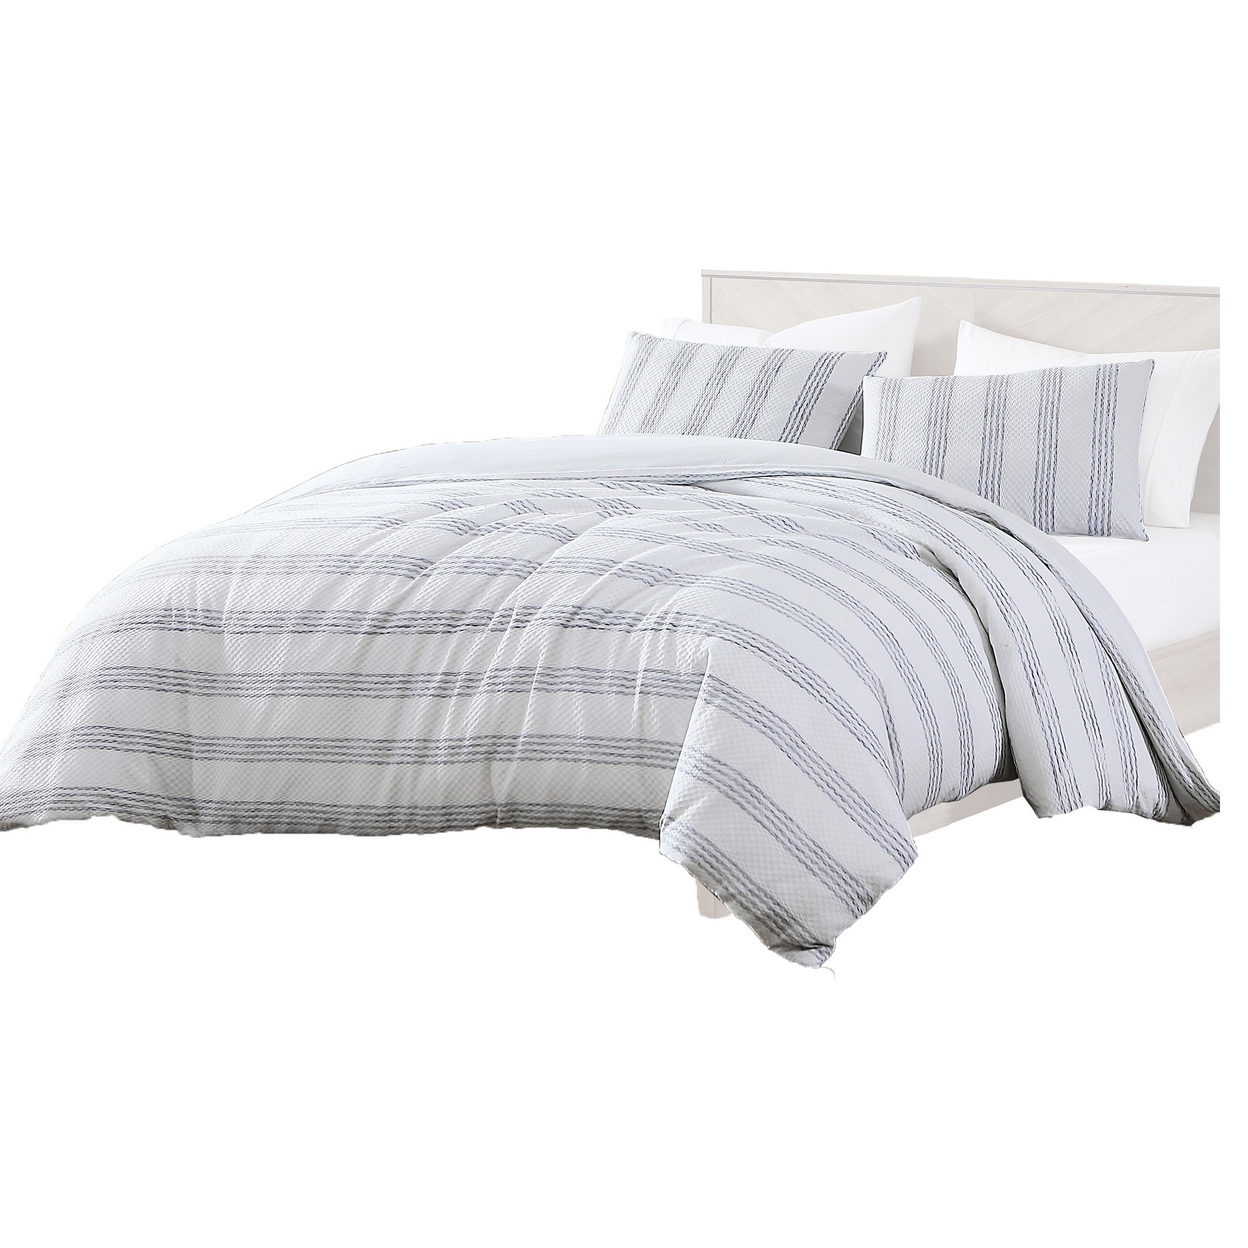 Sam 4 Piece Queen Size Duvet Comforter Set, Cotton, Striped Woven, White - Saltoro Sherpi